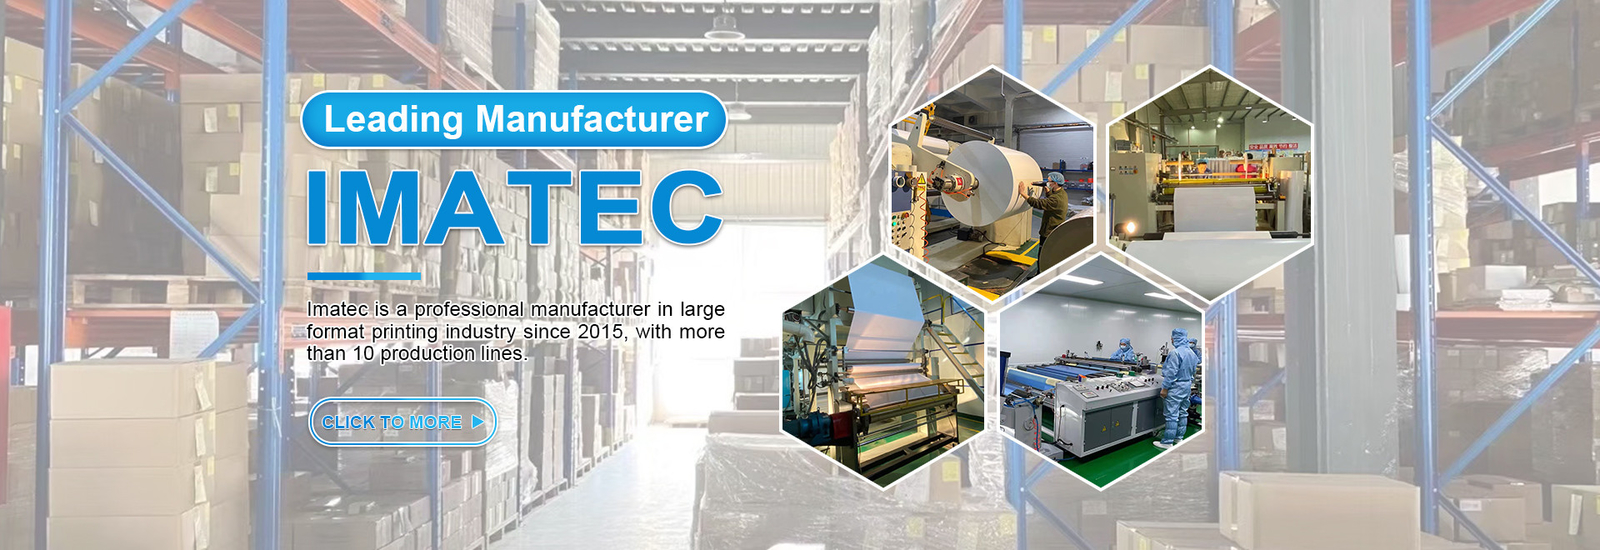 Imatec Imaging Co., Ltd. خط إنتاج الشركة المصنعة